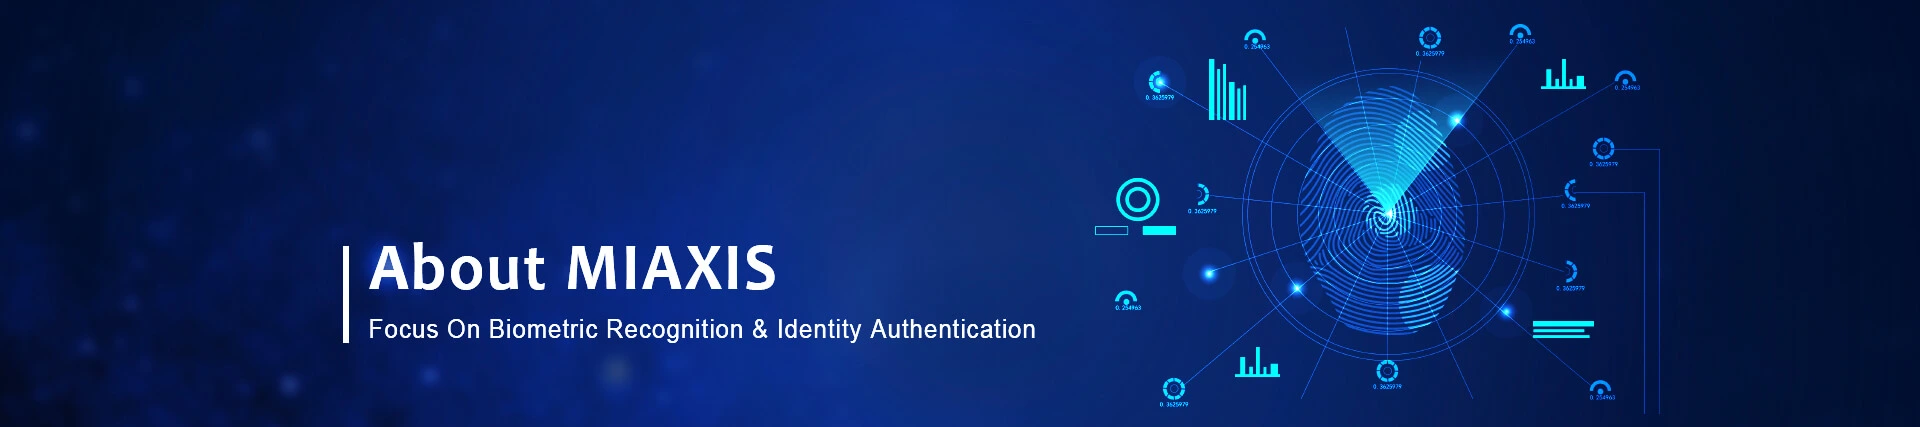 Miaxis Biometric Products Company